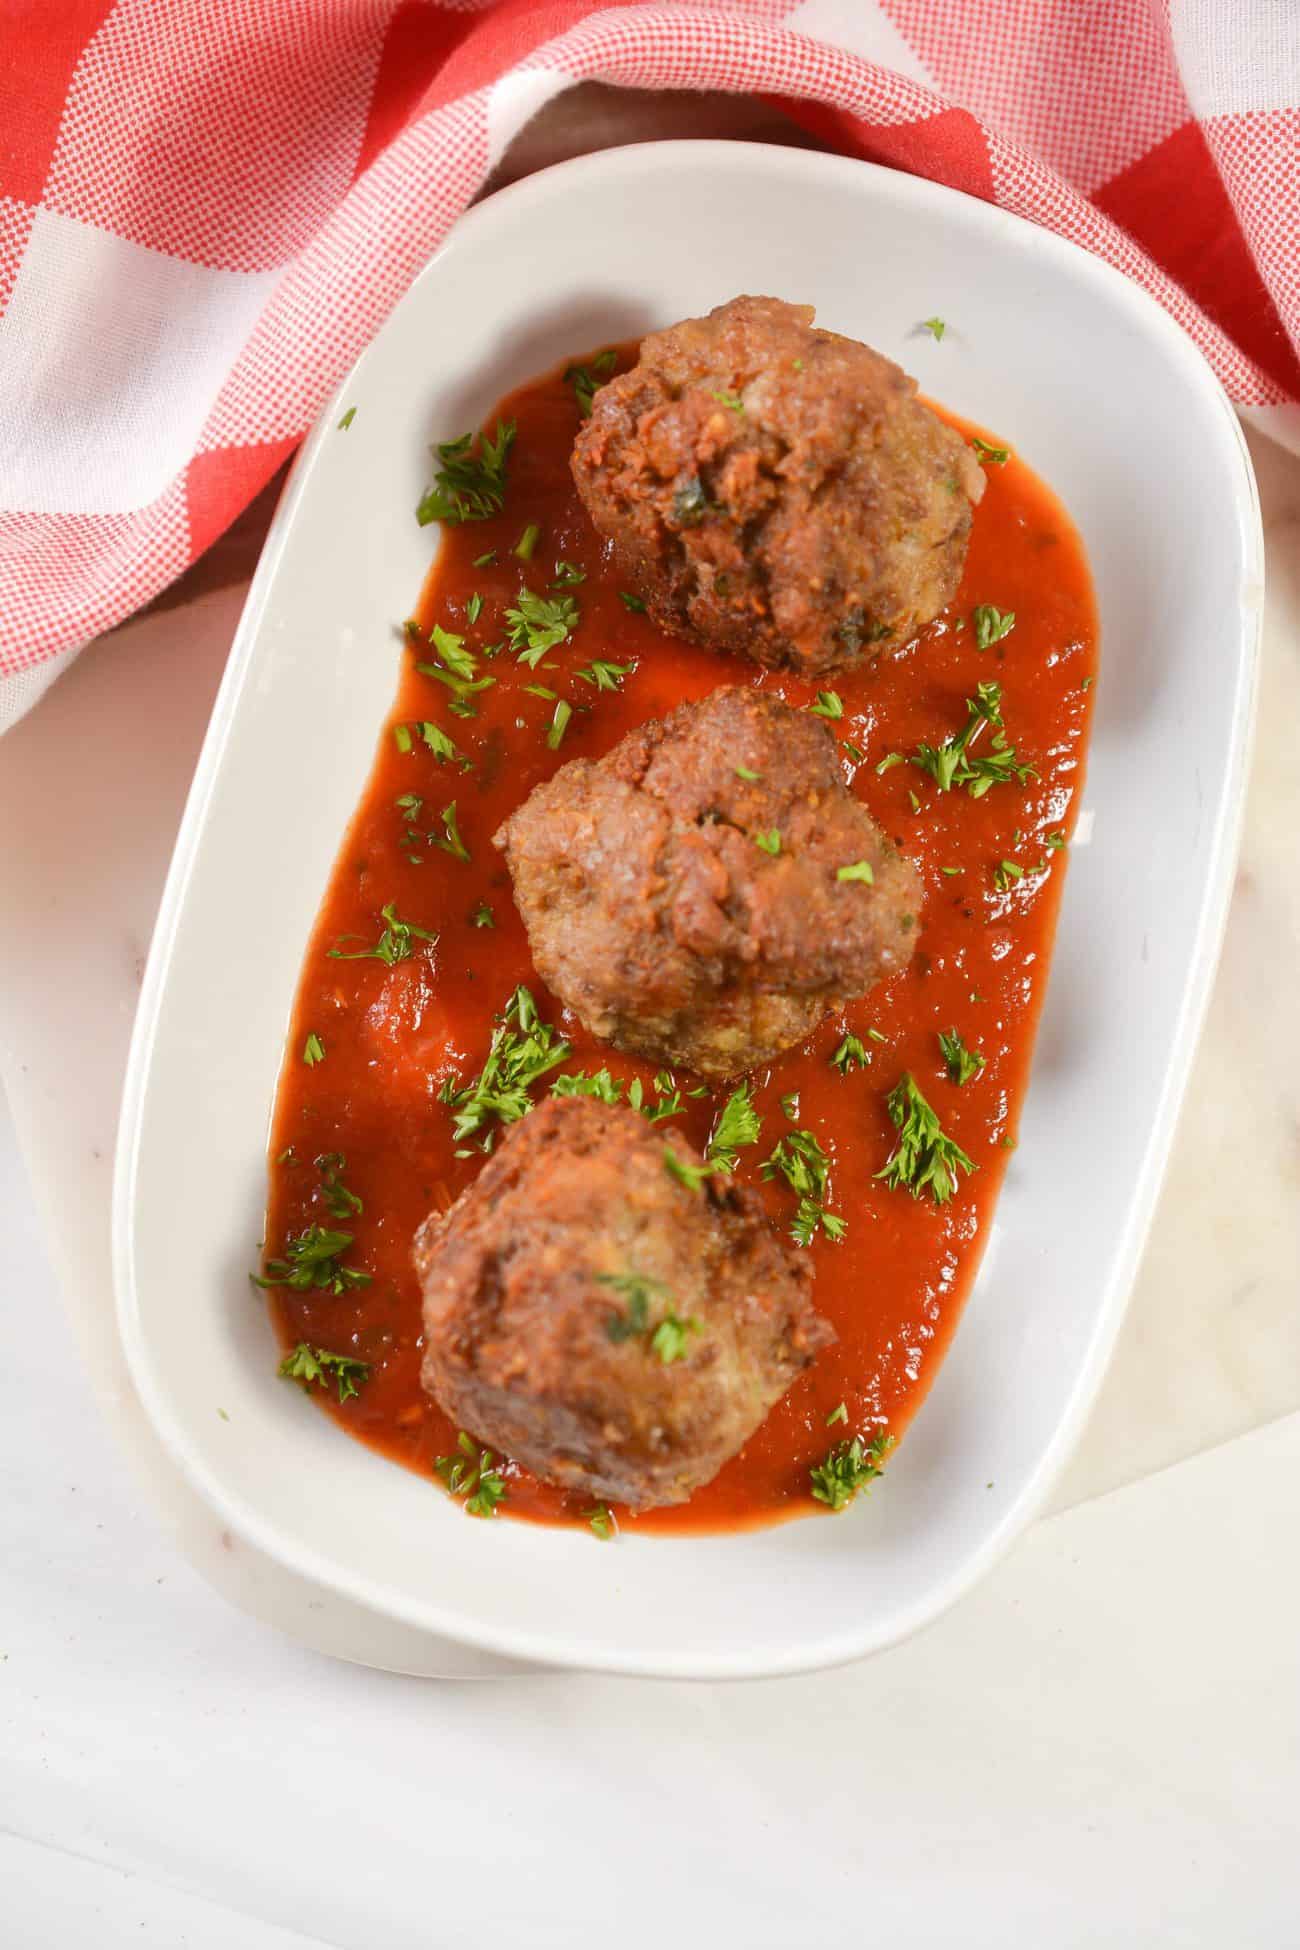 Grandma’s Italian Meatballs